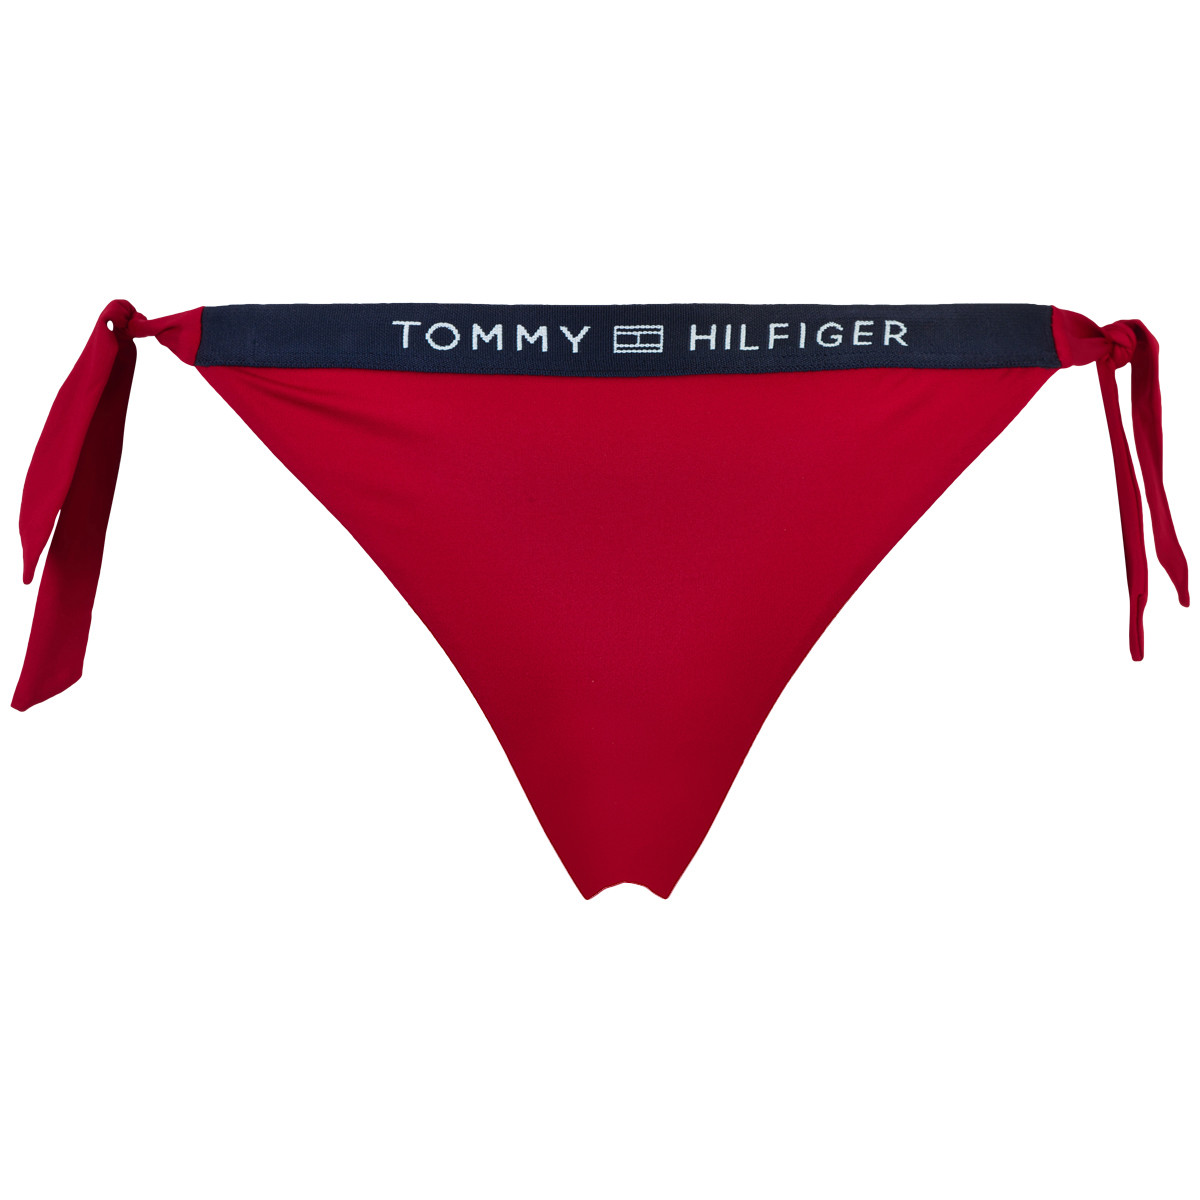 TOMMY HILFIGER LINGERI BIKINI TAI W02709 XLG (Primary Red, XS)